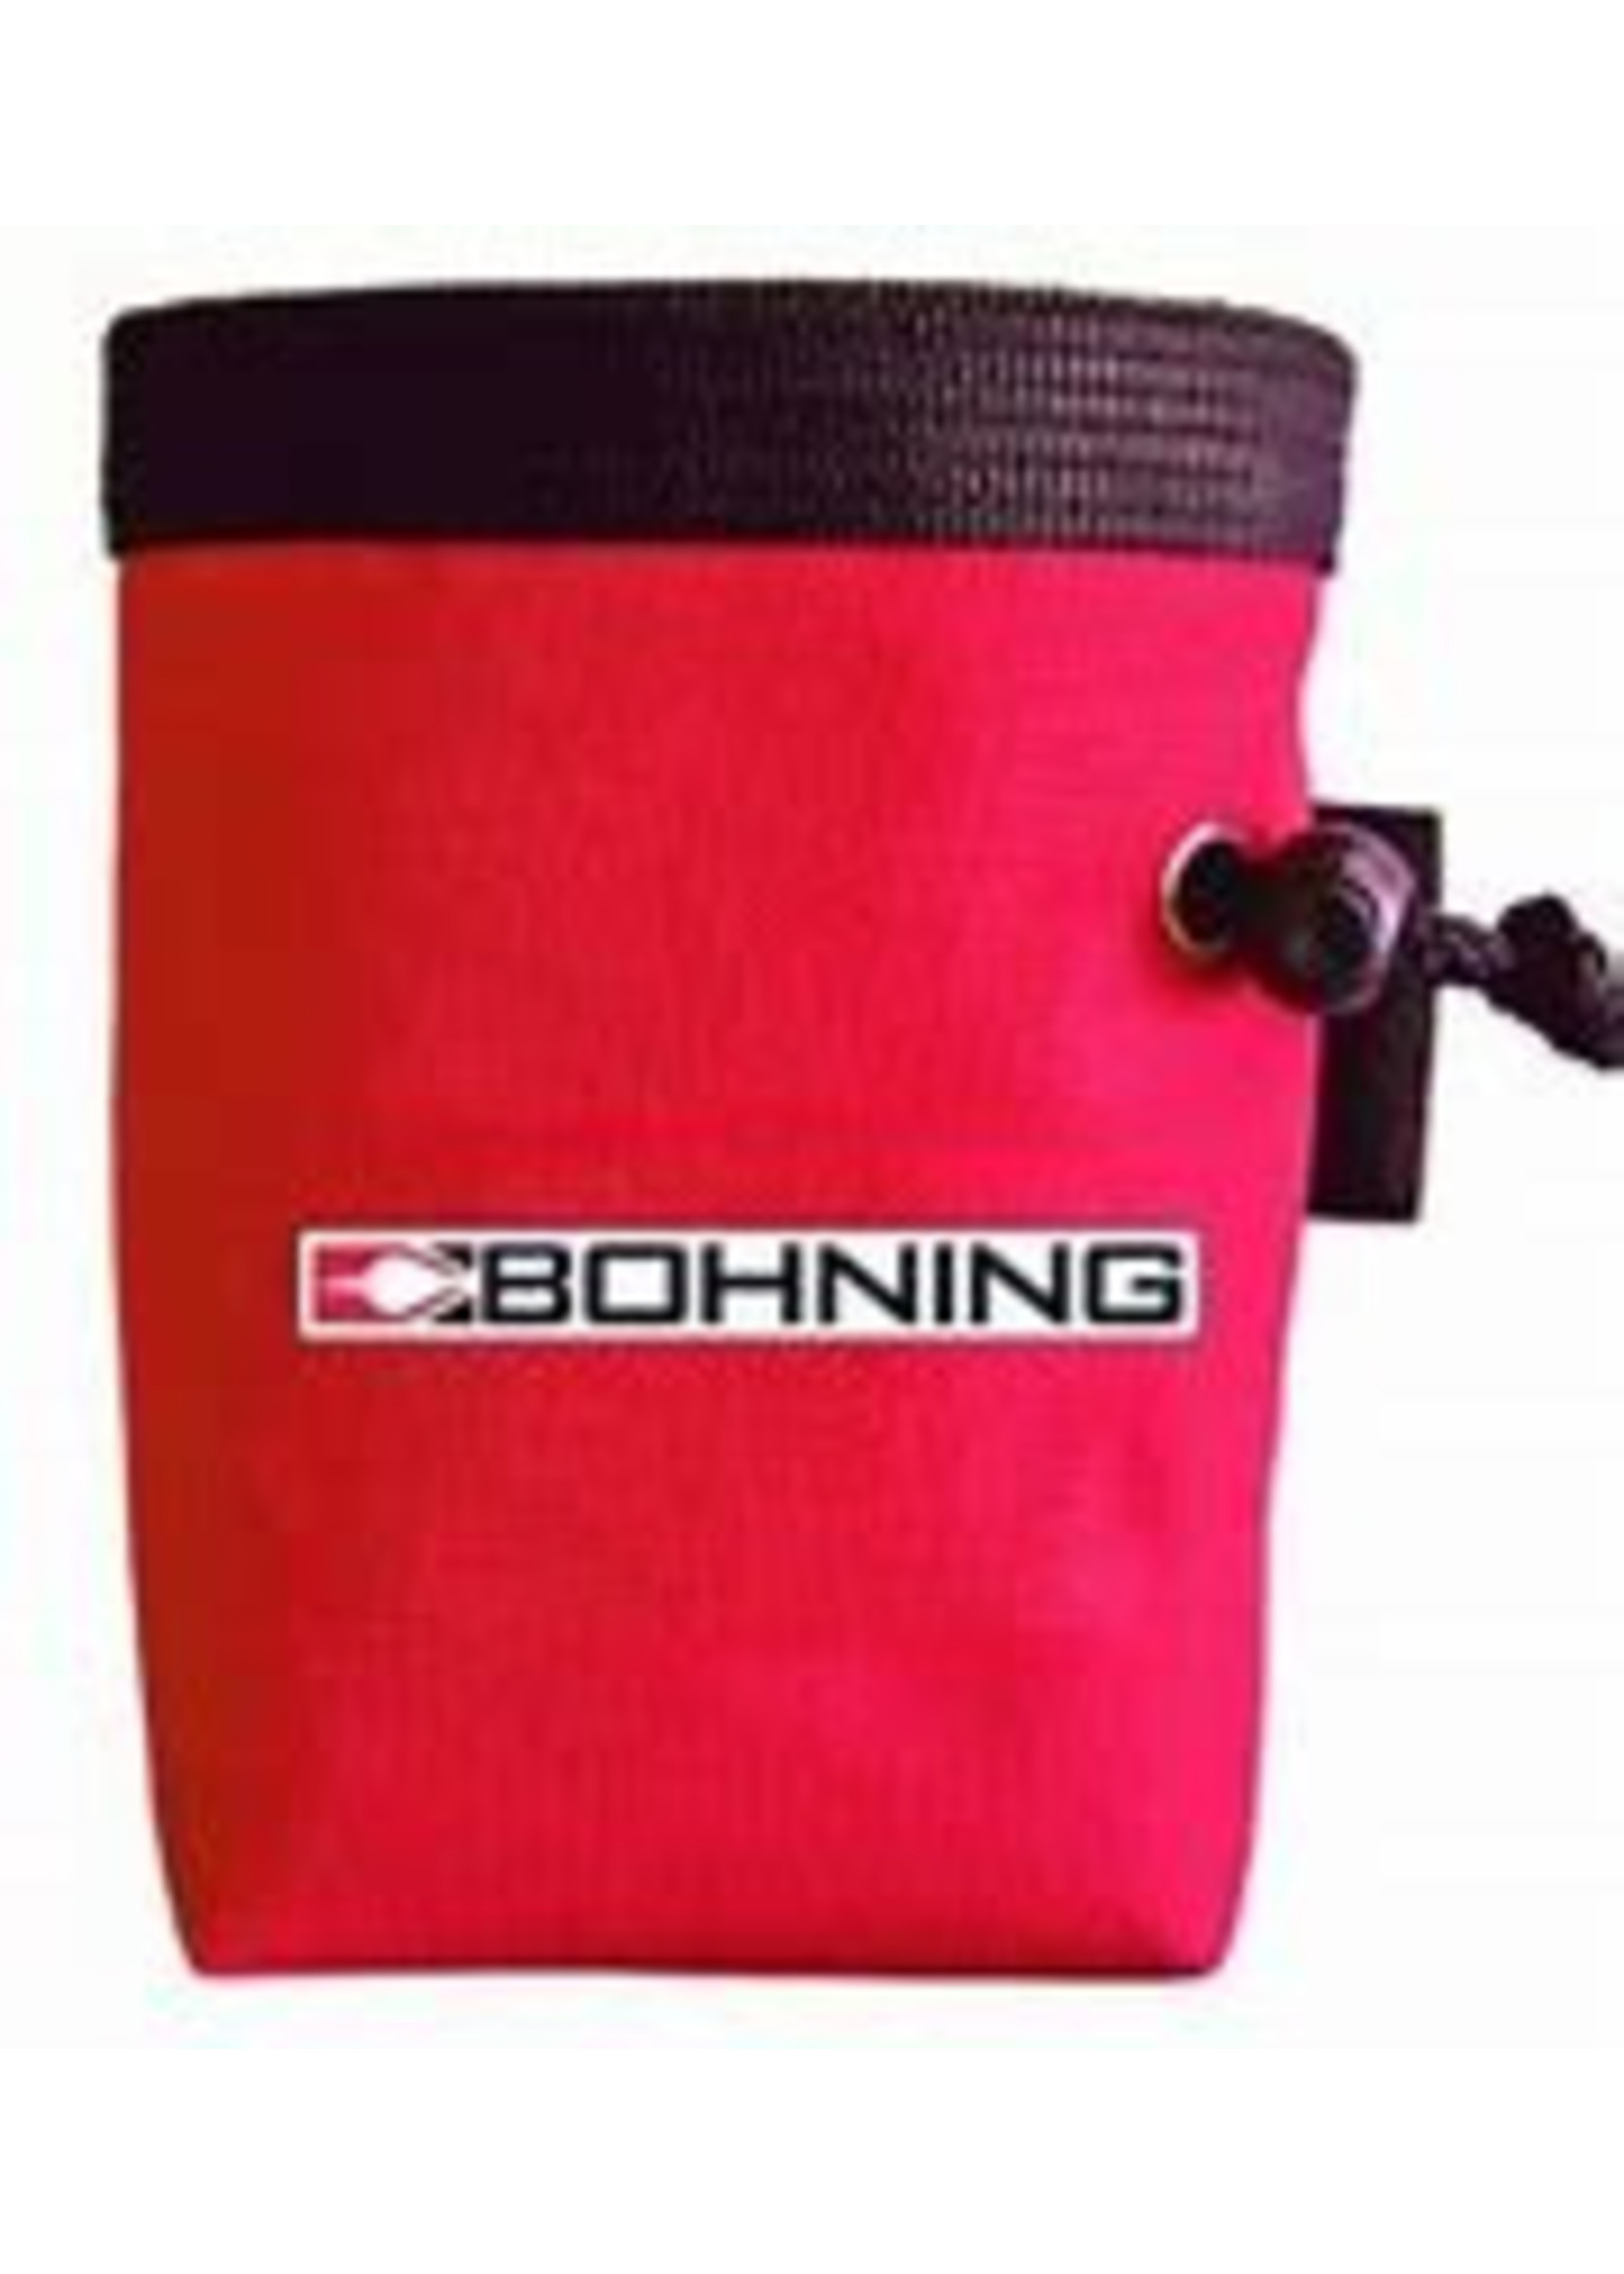 Bohning bohning pouch red